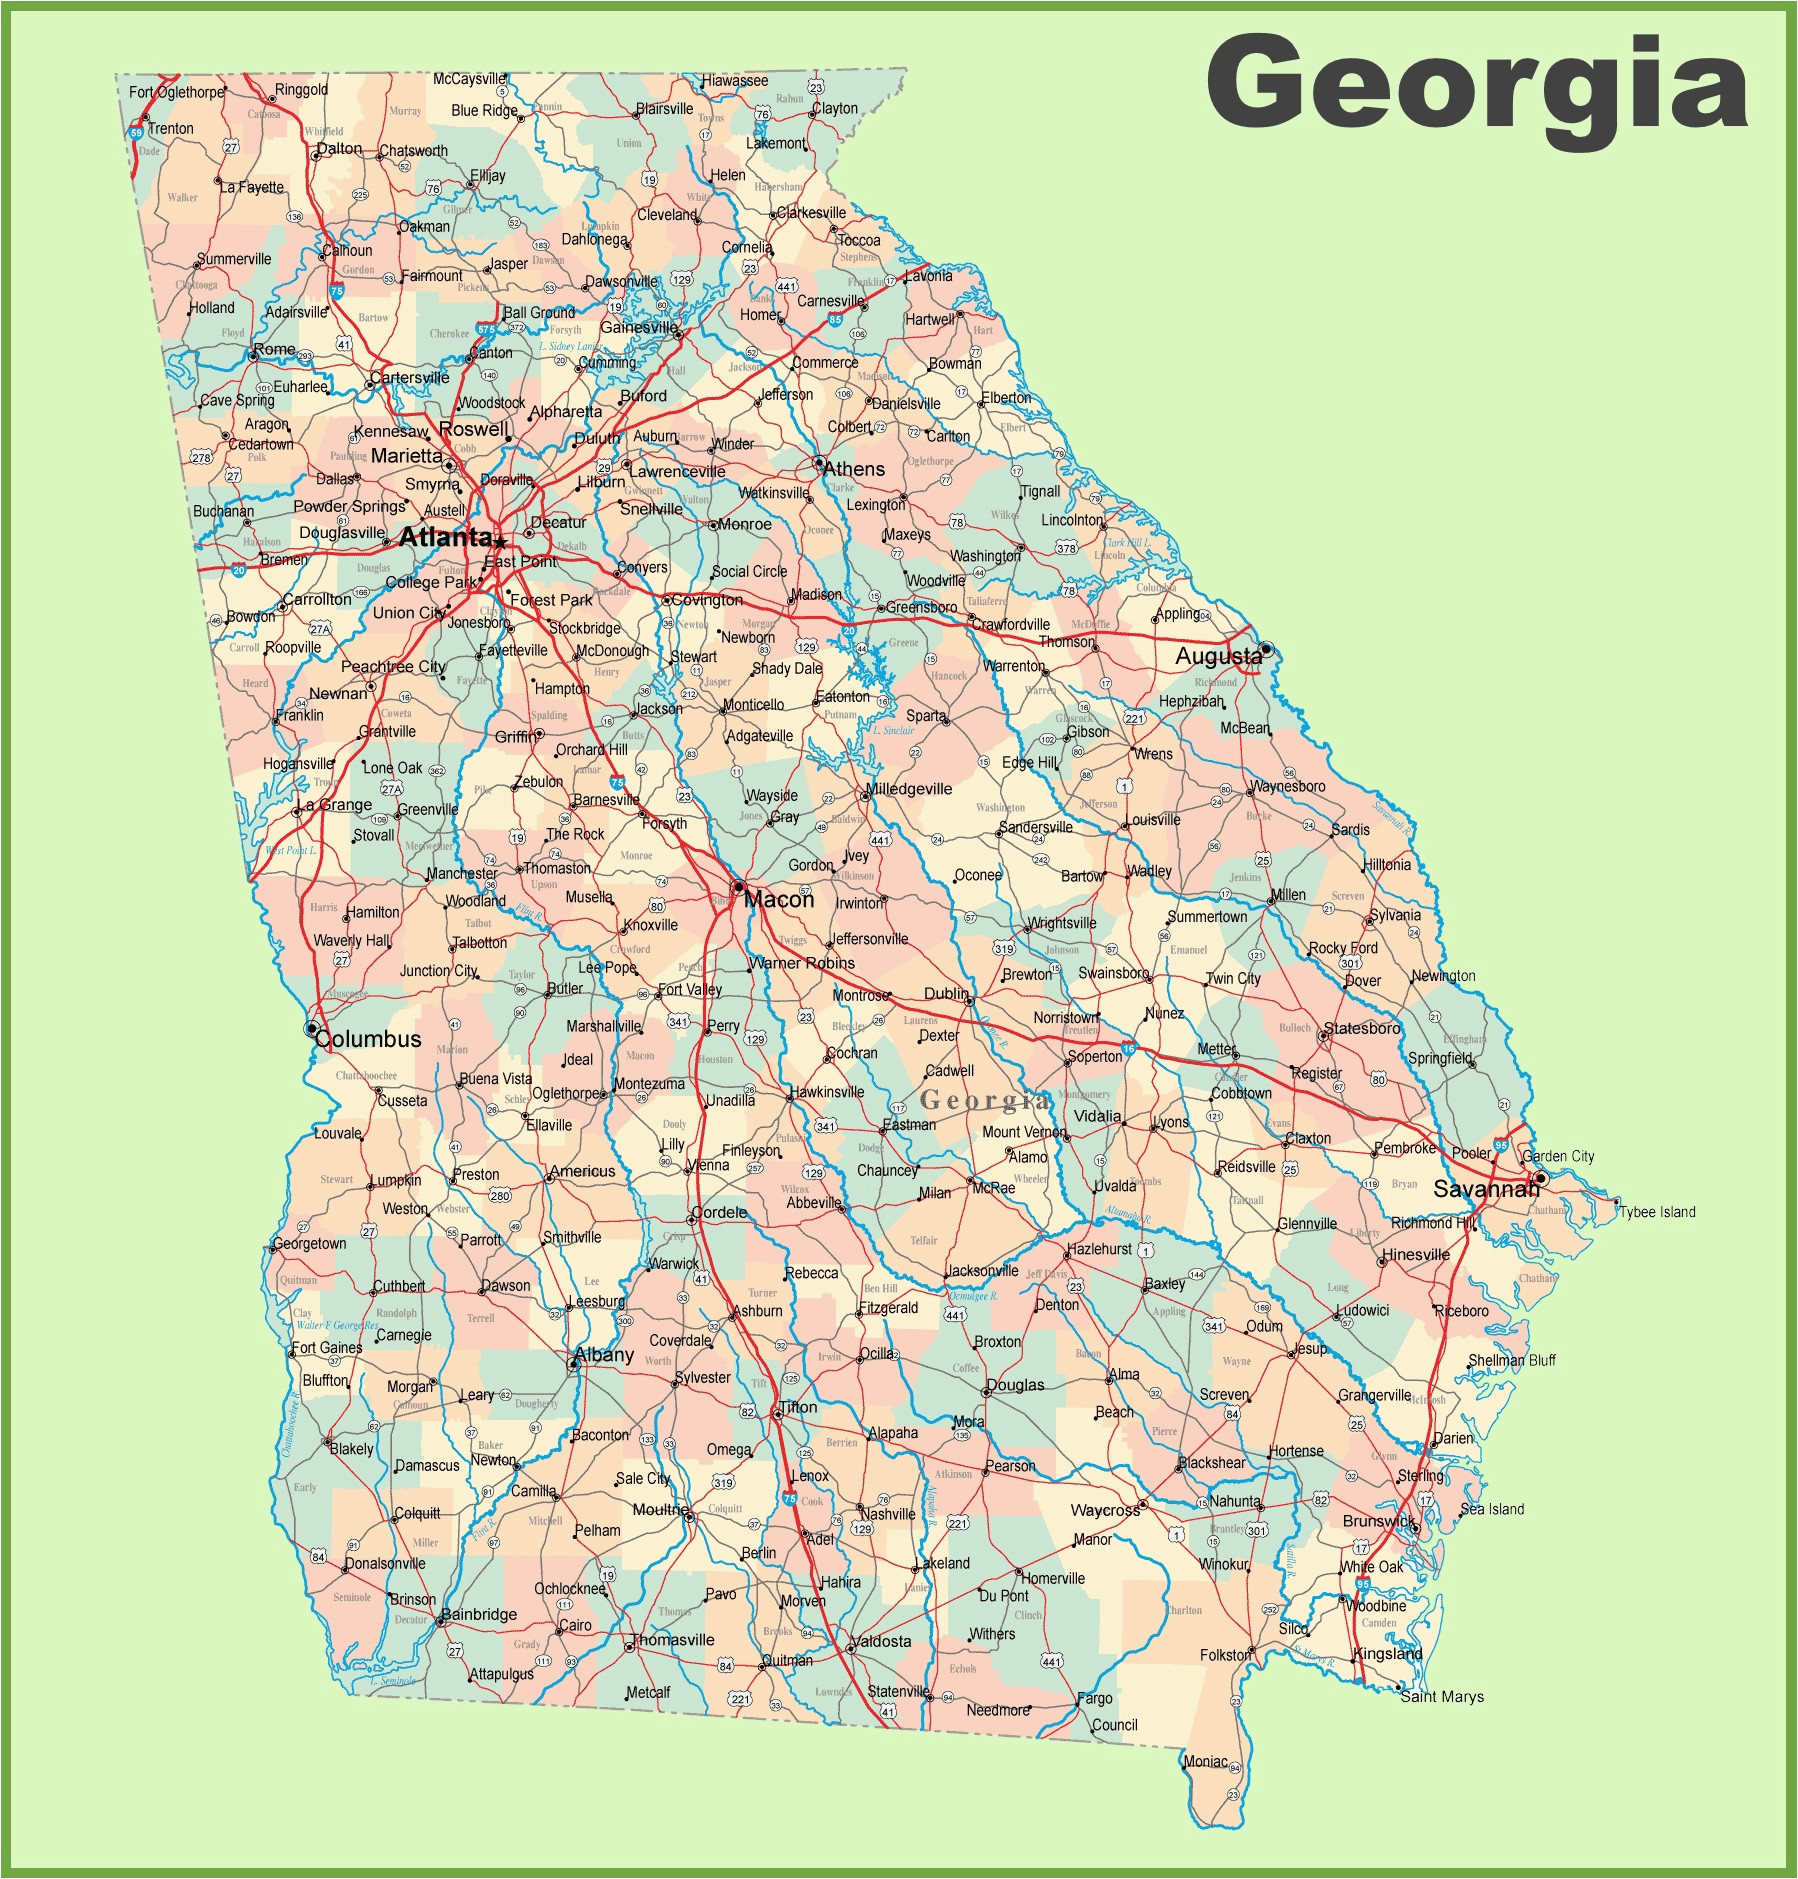 Georgia State Highway Map Georgia Road Map With Cities And Towns Of Georgia State Highway Map 